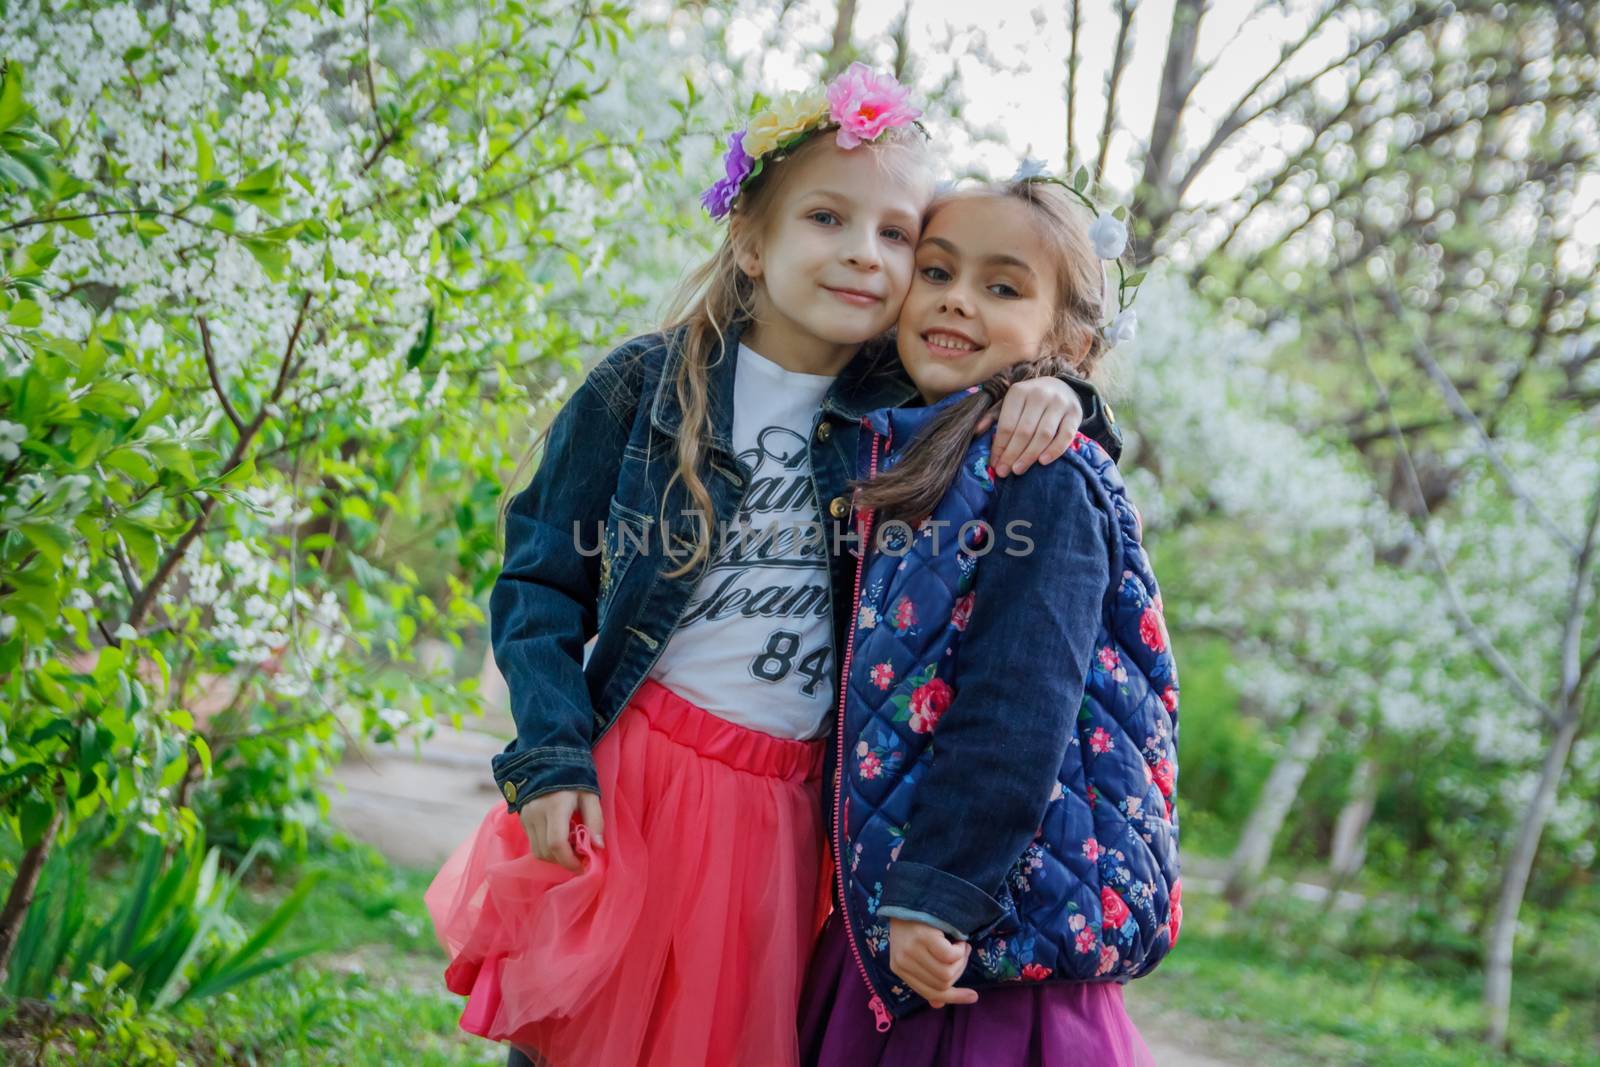 Two girls enjoying spring garden by Angel_a